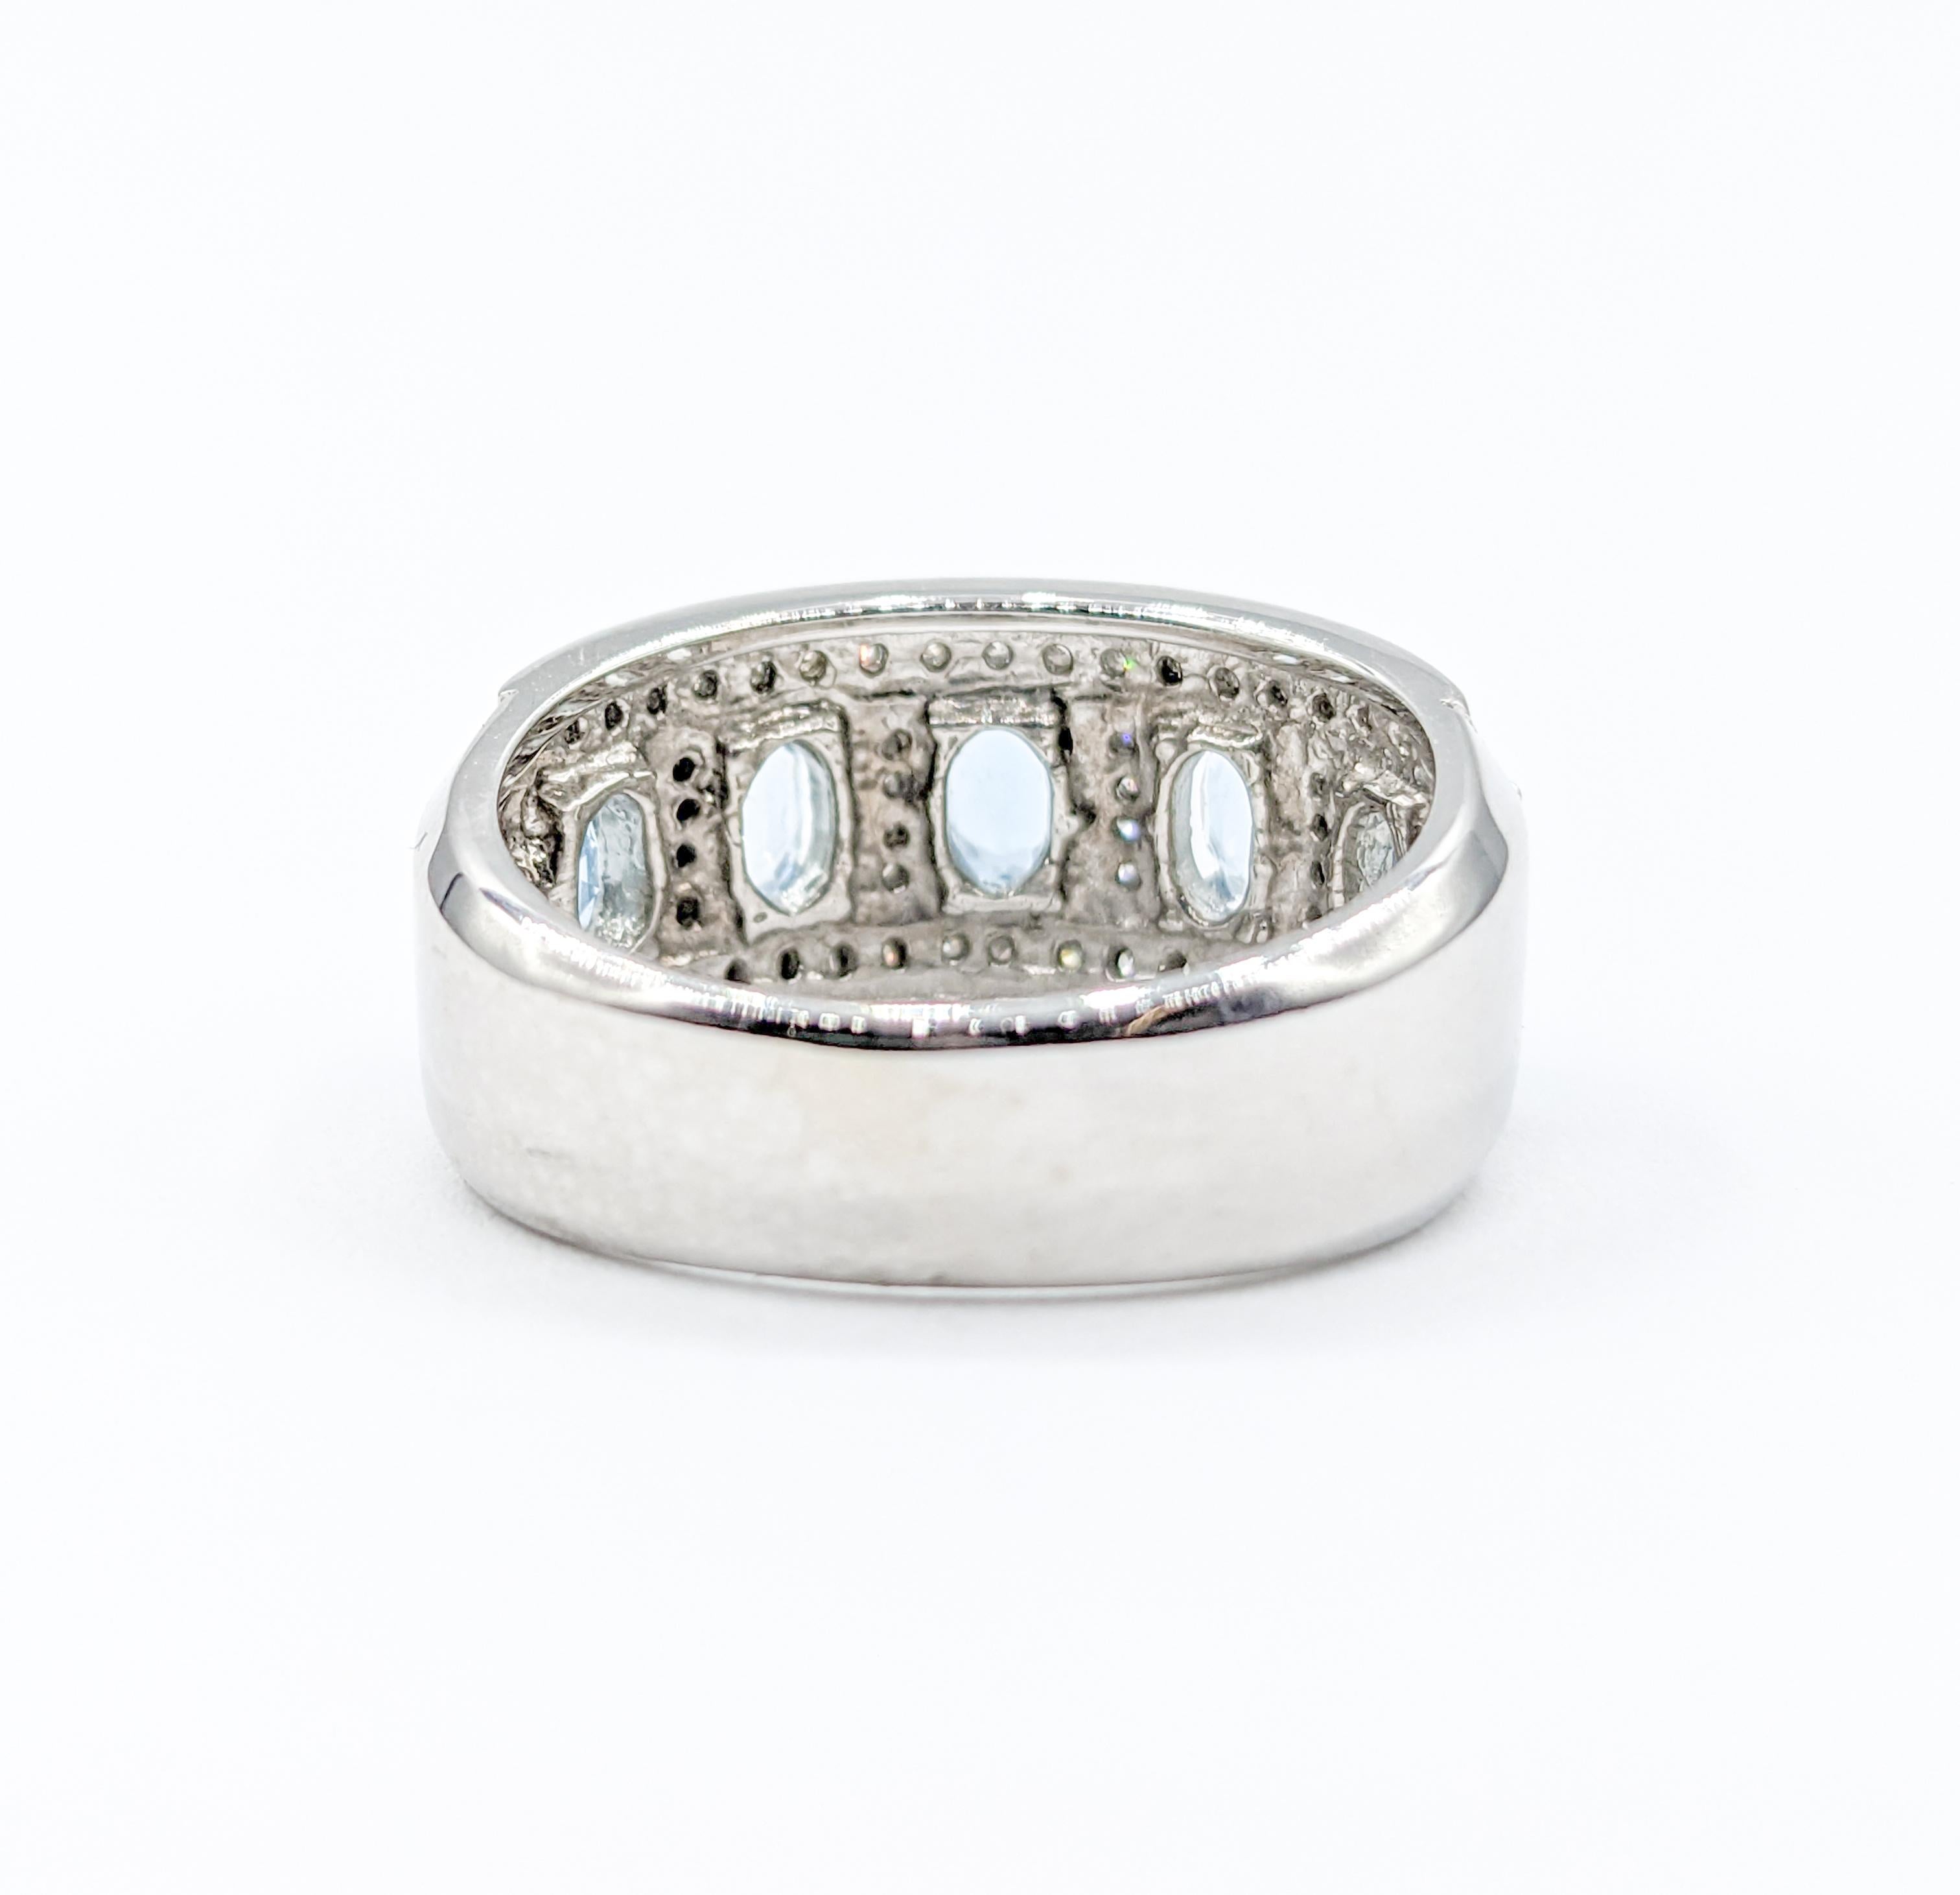  Fabulous Aquamarine & Diamond Wide Band Ring in White Gold 3